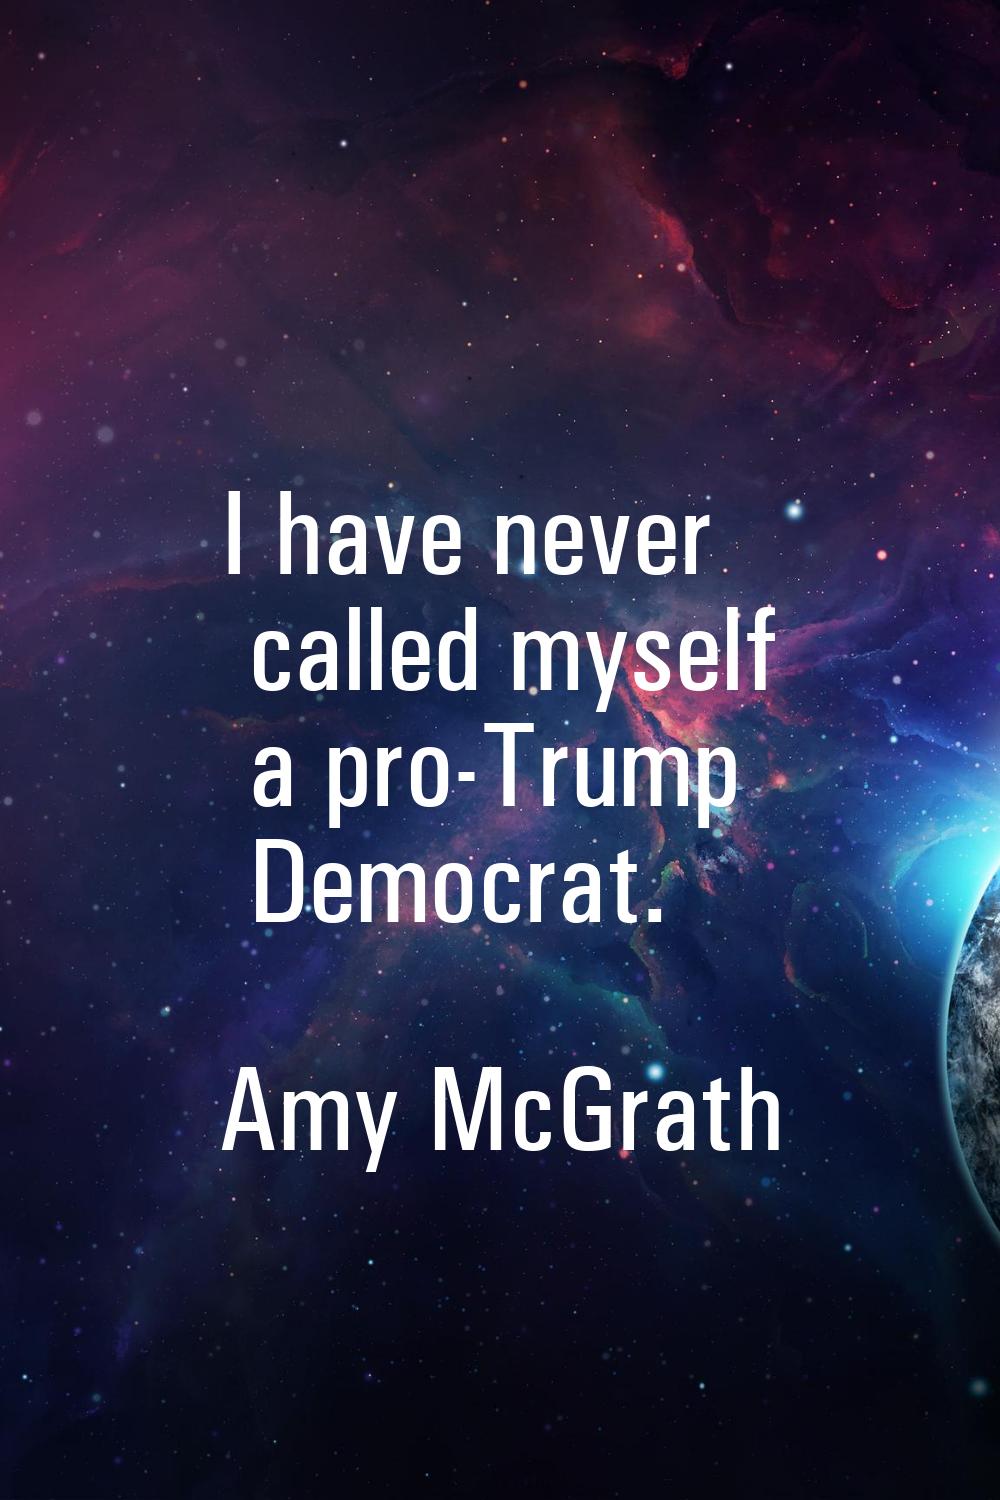 I have never called myself a pro-Trump Democrat.